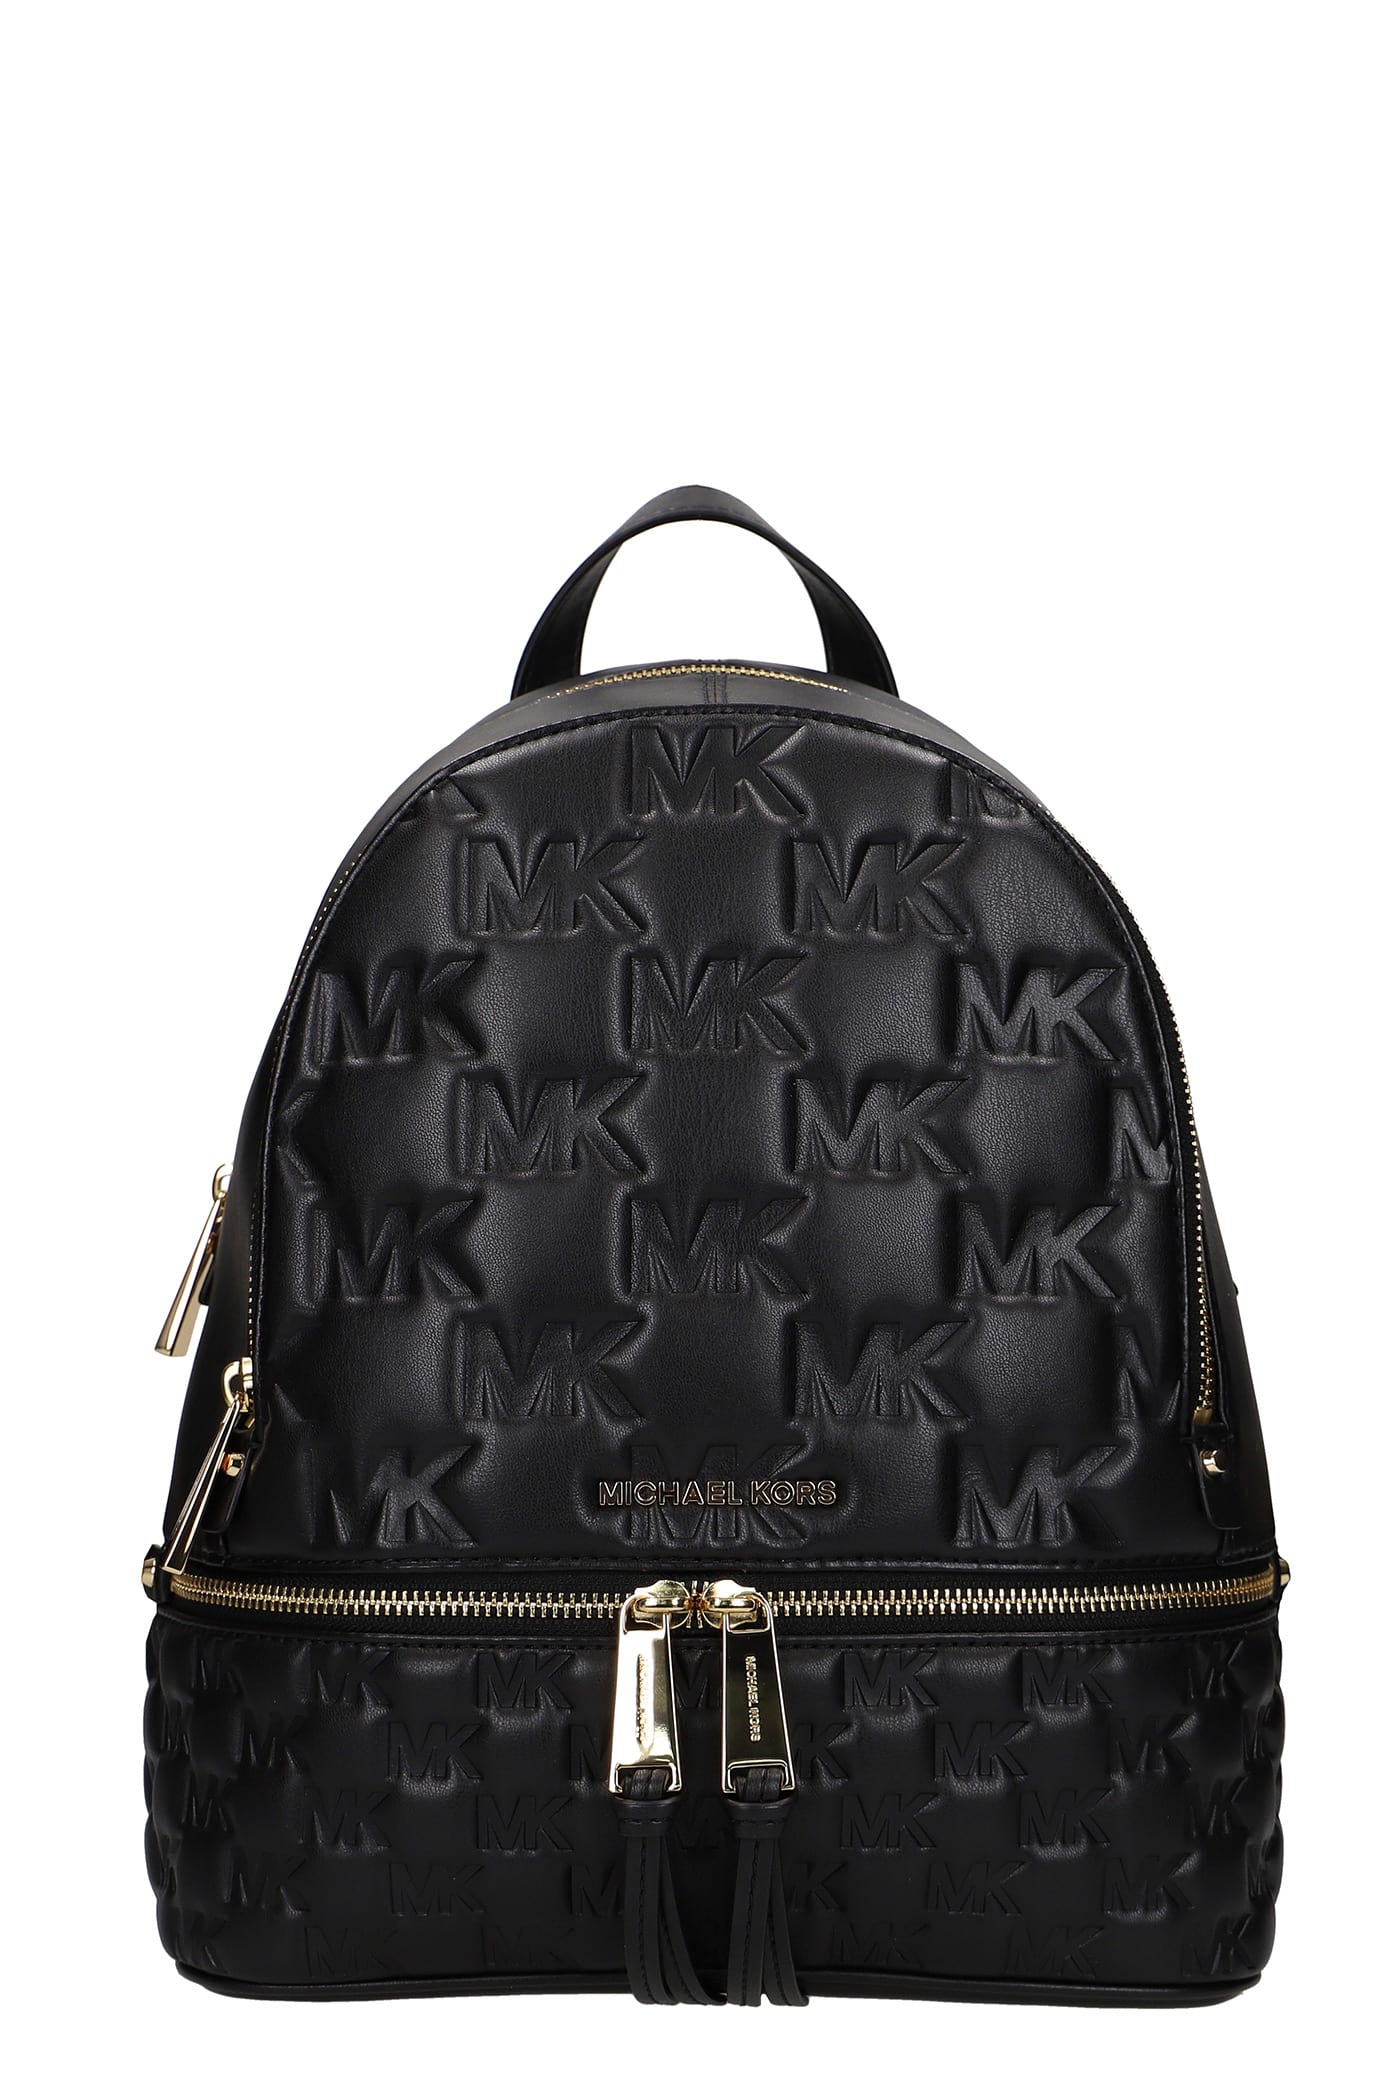 Michael Kors Rhea Zip Backpack In Black Leather